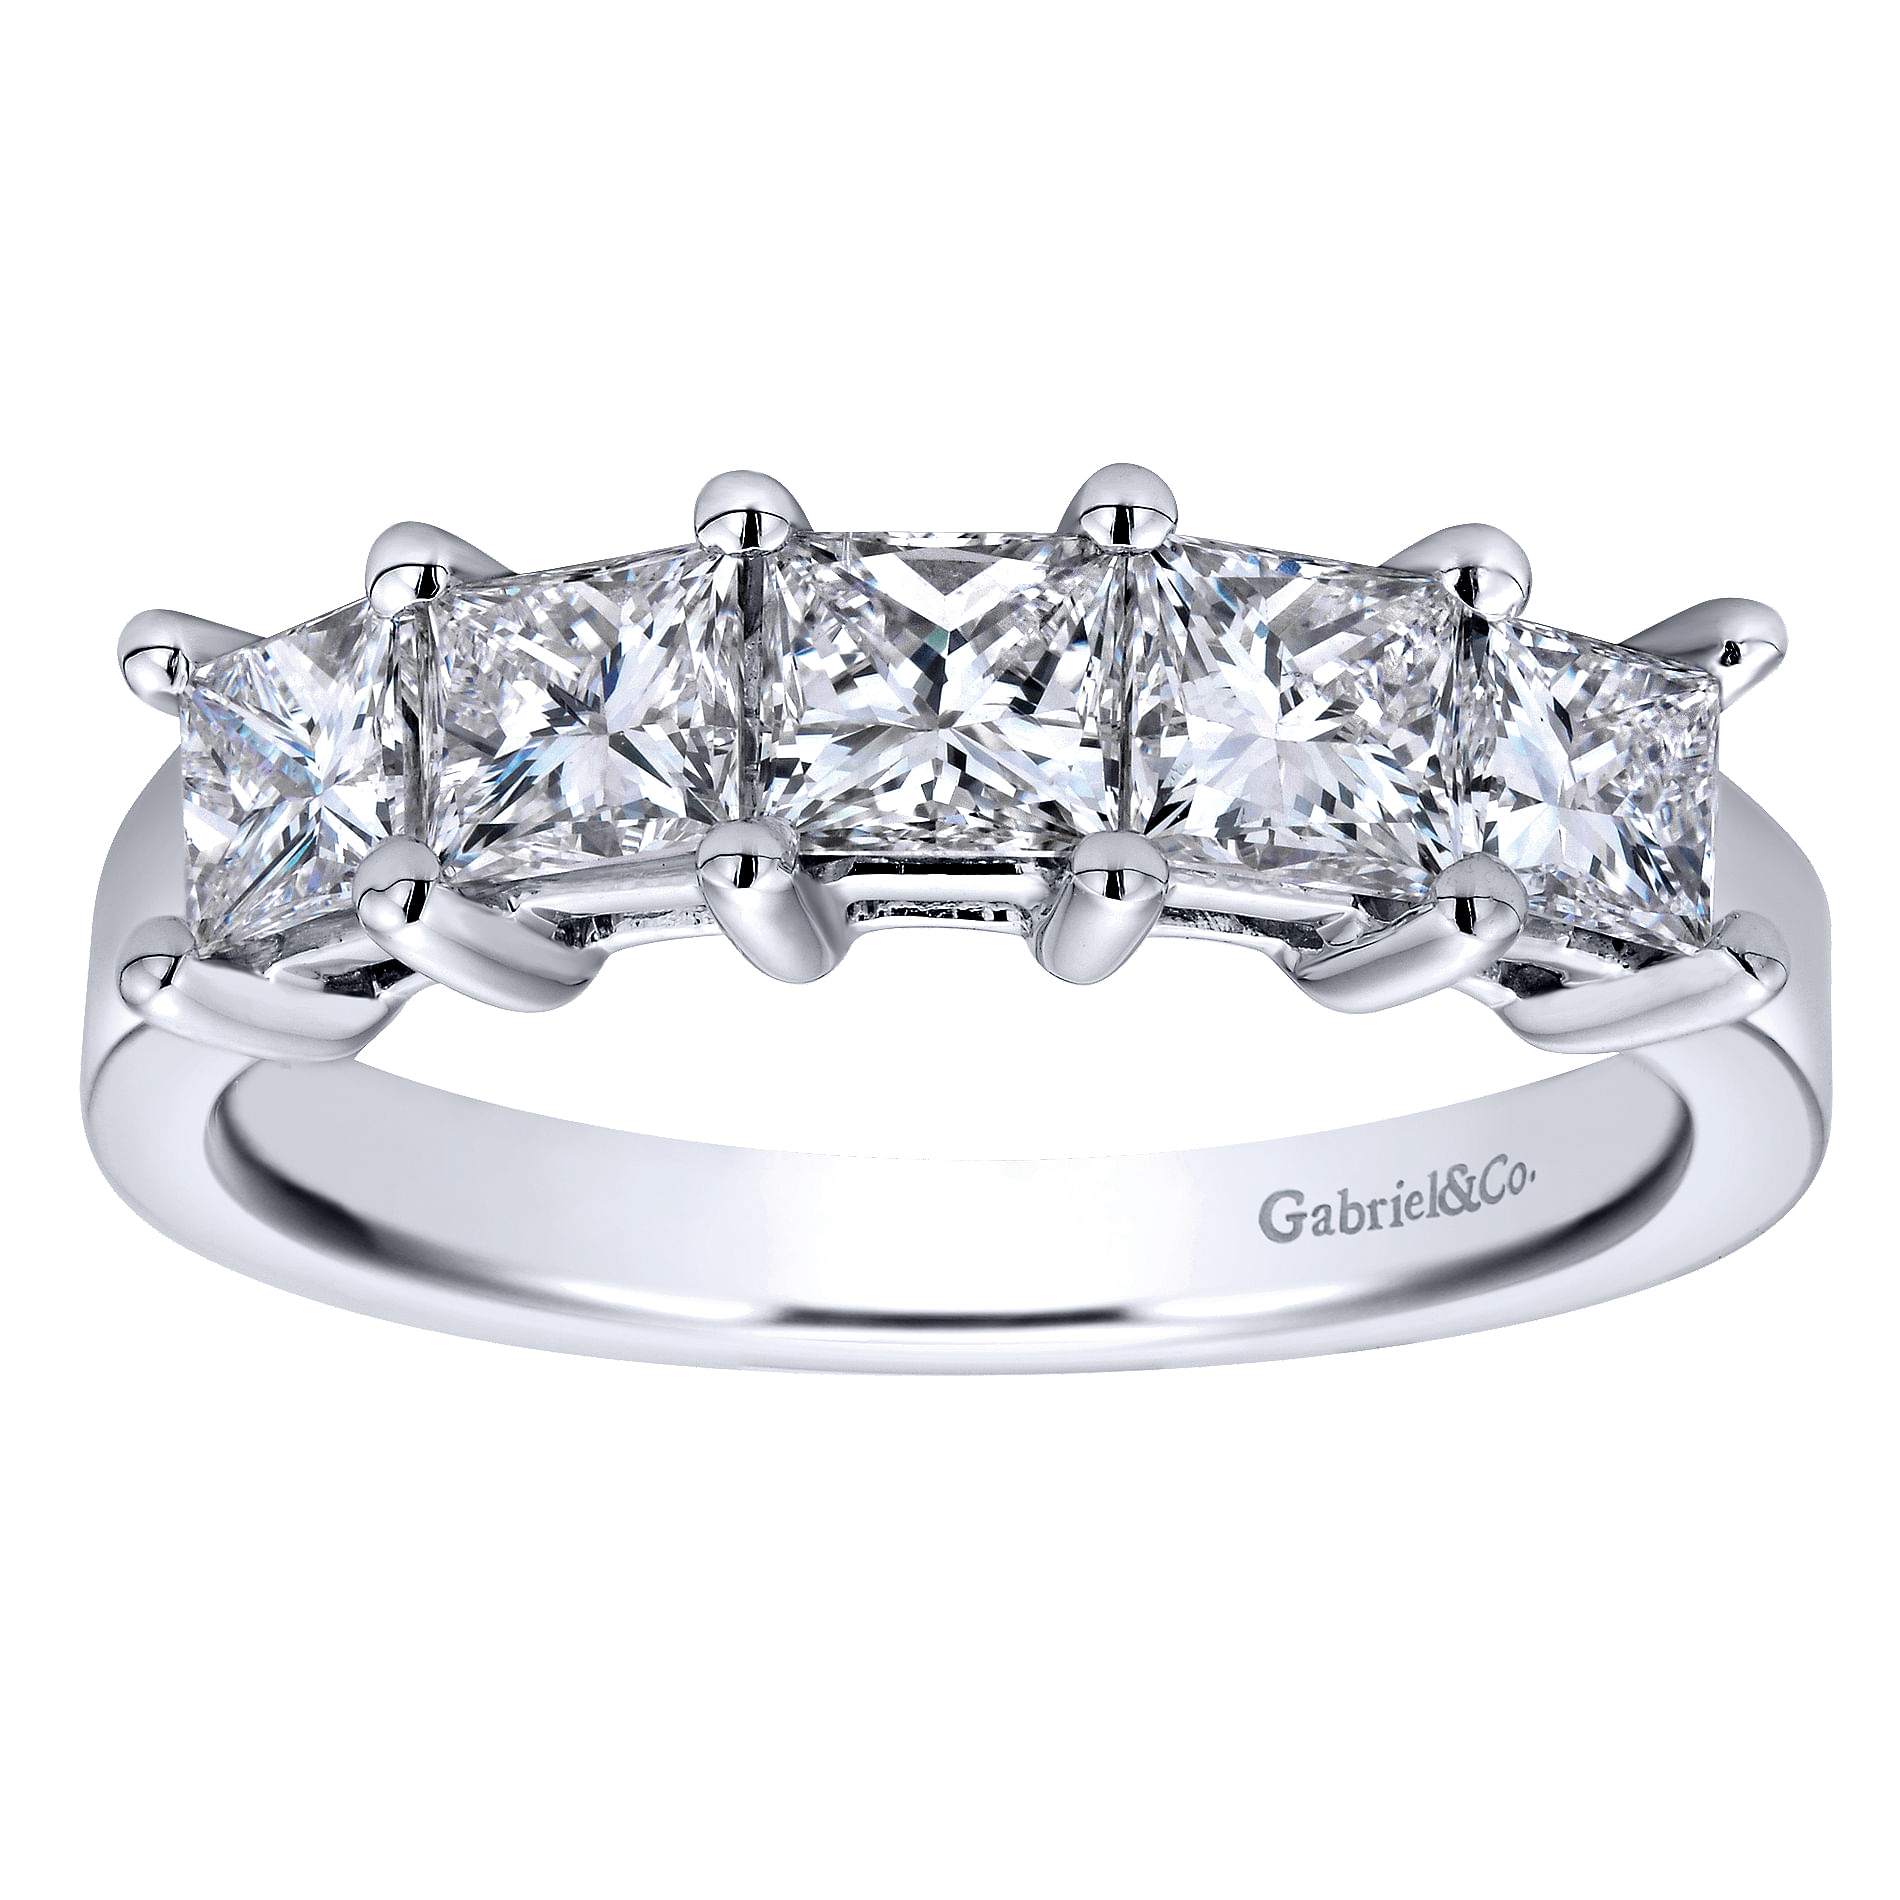 14K White Gold Princess Cut 5 Stone Prong Set Diamond Wedding Band